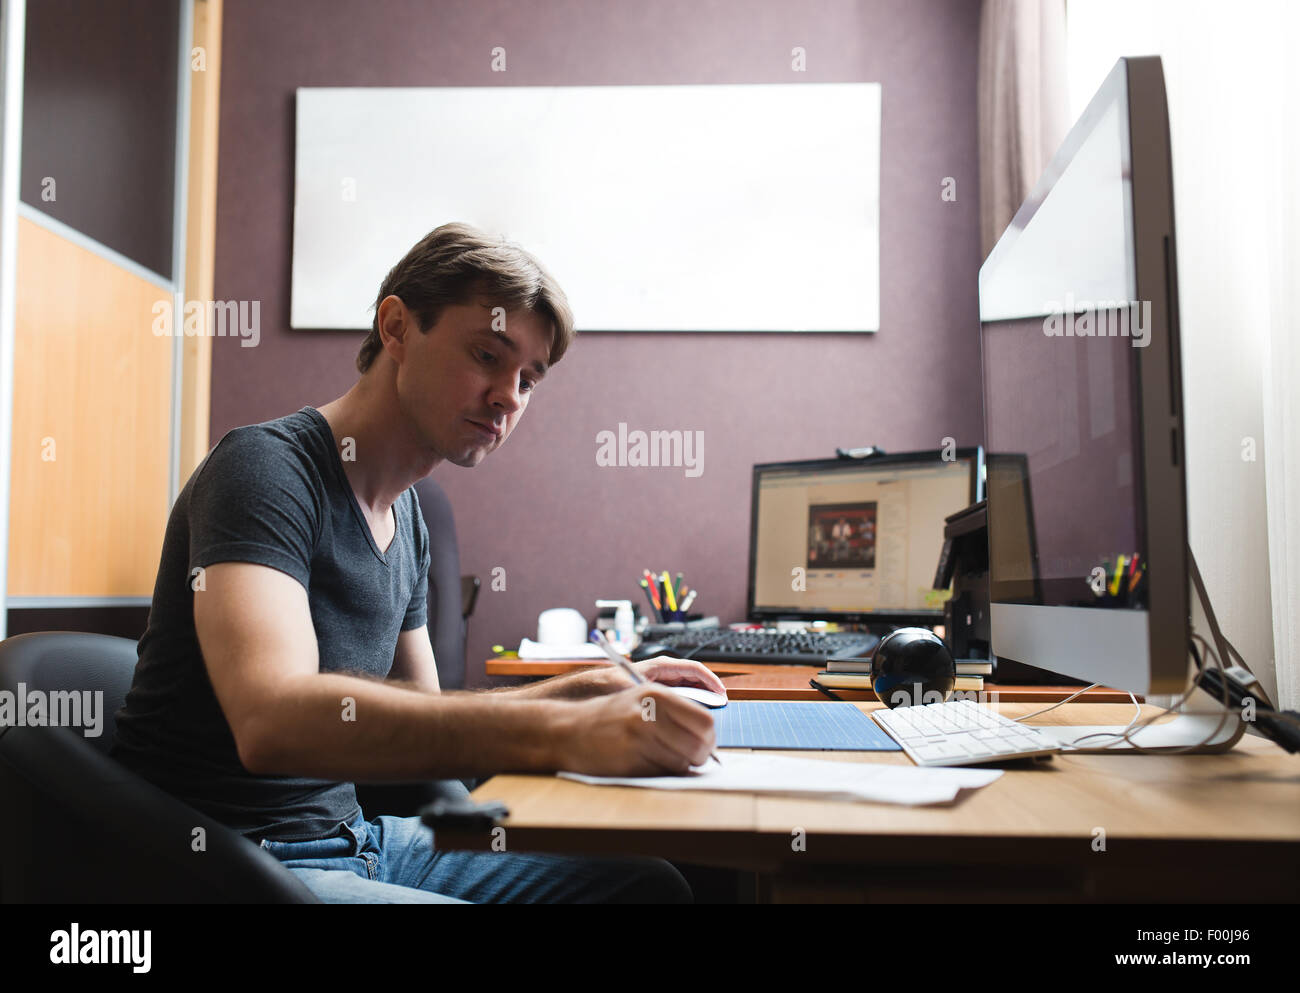 Freelance developer or designer working at home Stock Photo